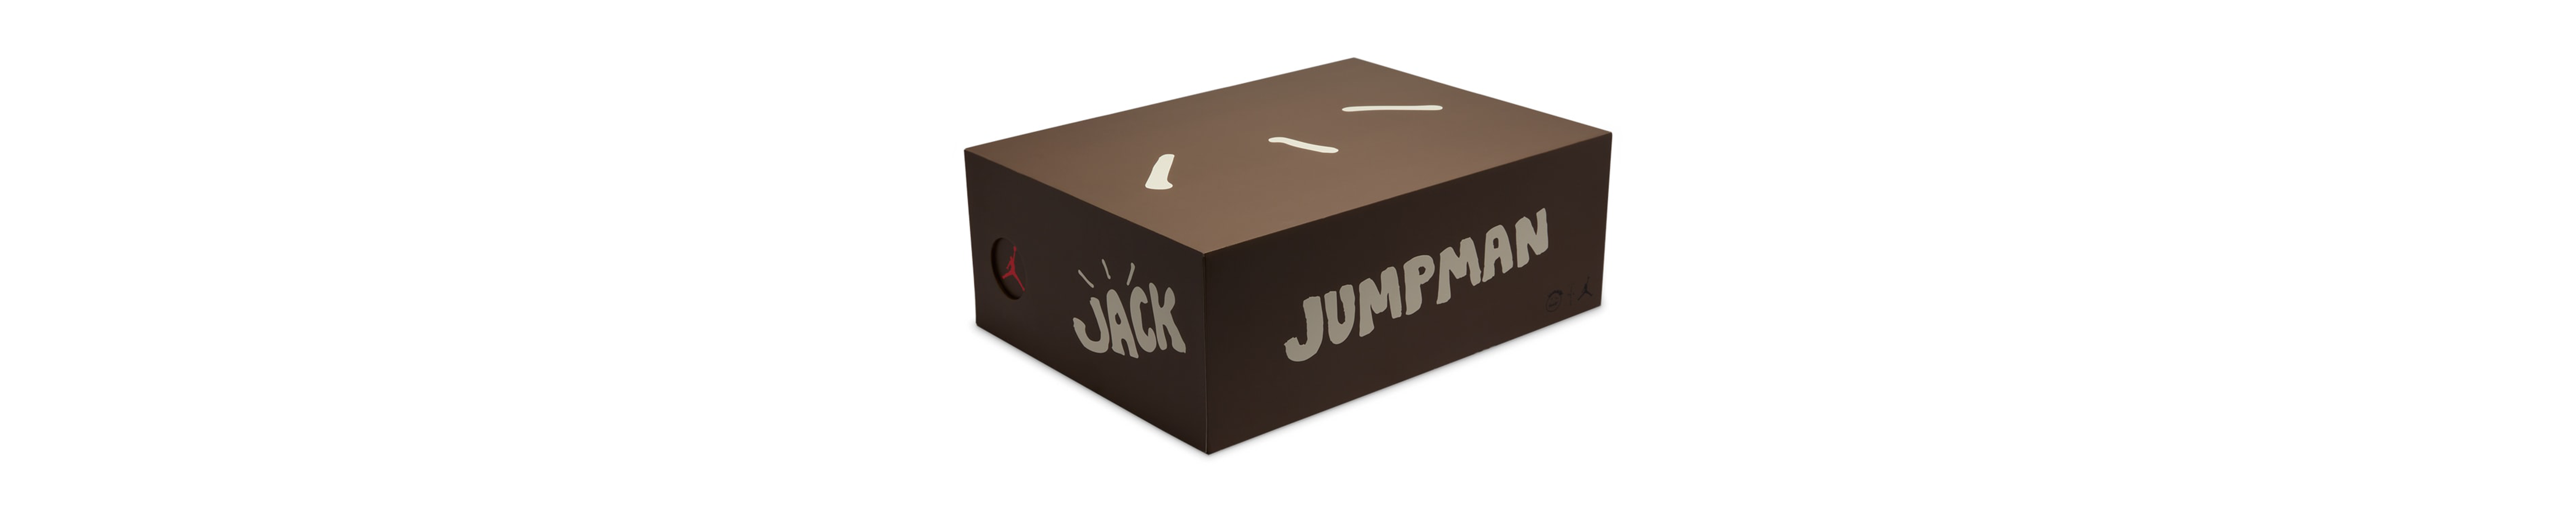 The Travis Scott Jumpman Jack is Unveiled in 